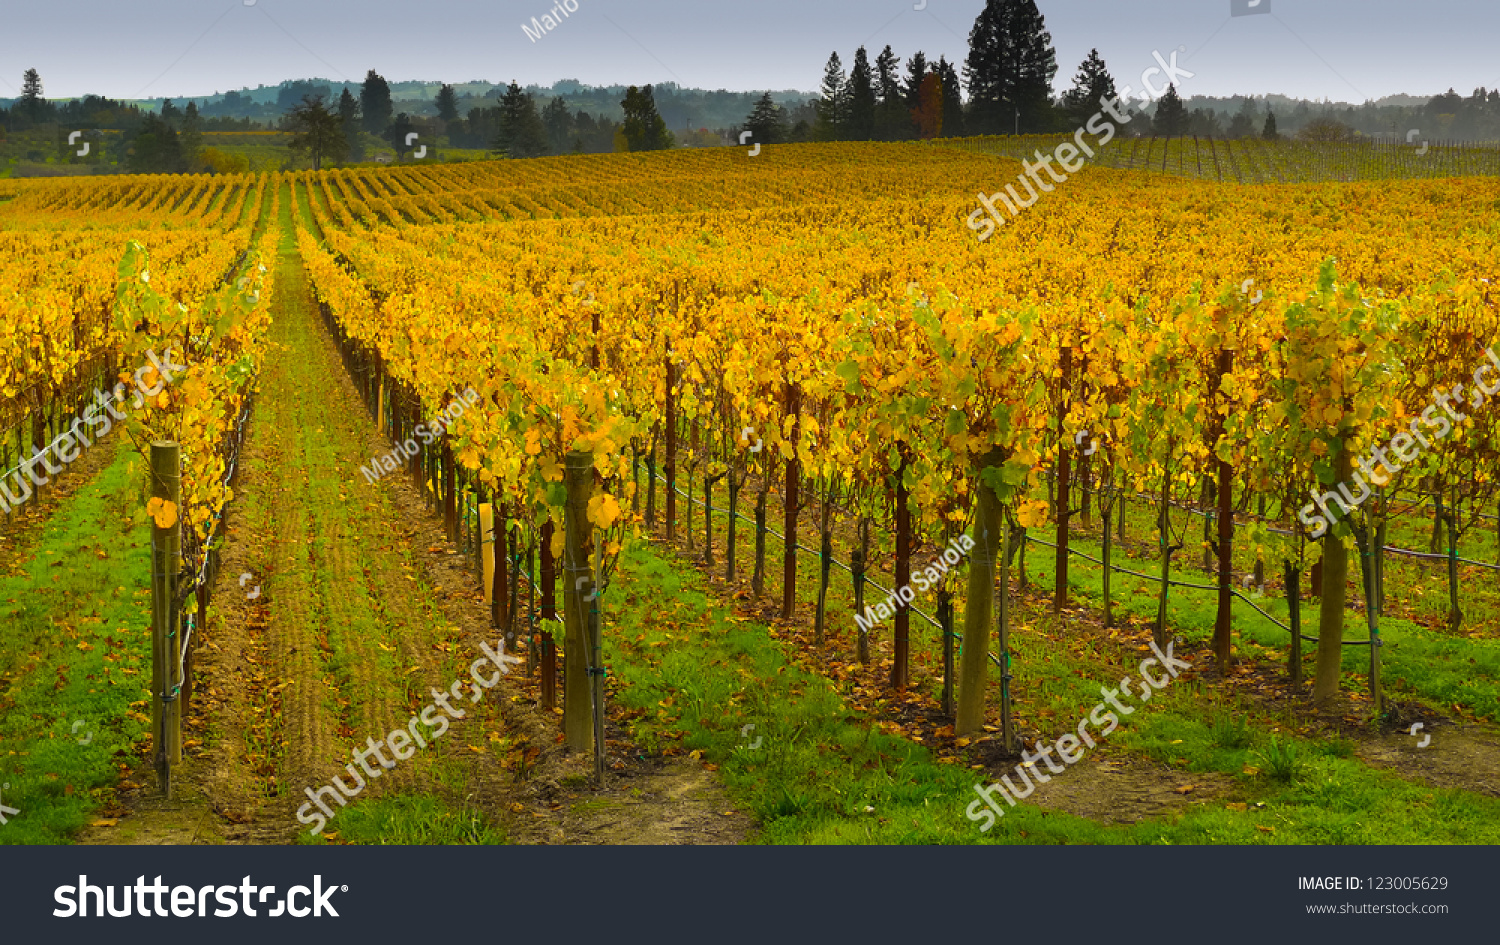 Vineyard in autumn, Napa Valley, California #123005629